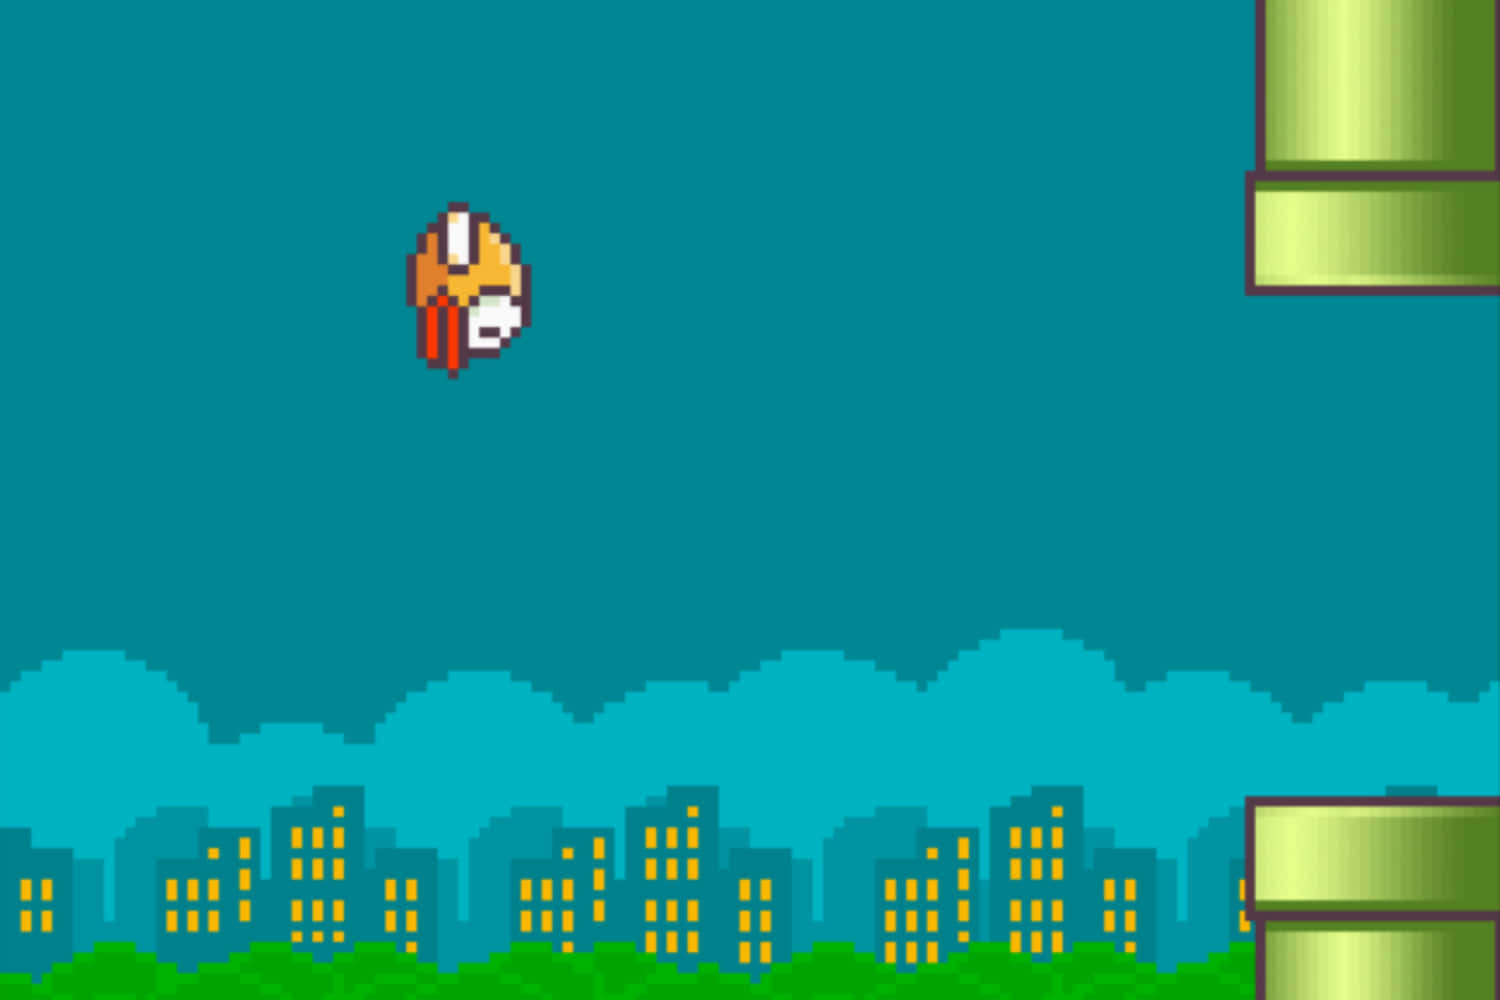 Red Flappy Bird Flappy Bird Blue Angry Flappy Bird PNG, Clipart, Android,  Angry Flappy Bird, Animals